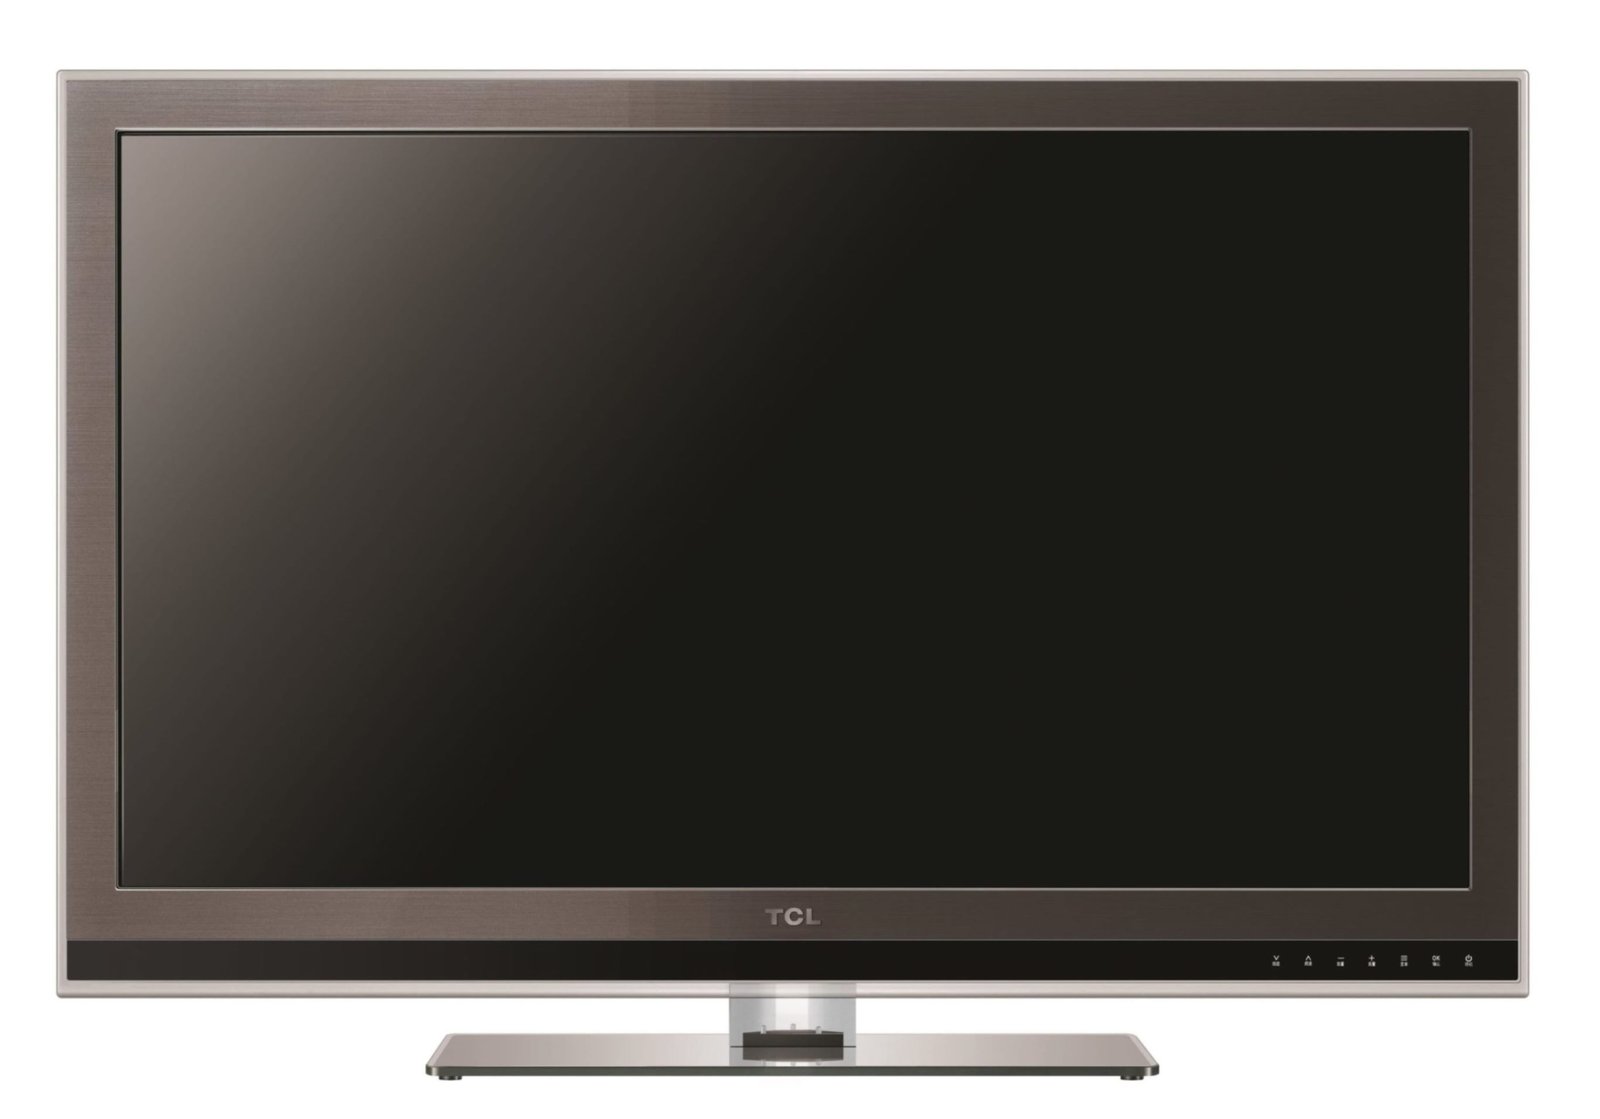 Tv marks. Телевизор TCL 21185 21". Телевизор TCL 2010. TCL 32s5200. TCL телевизор 32 2010 года.